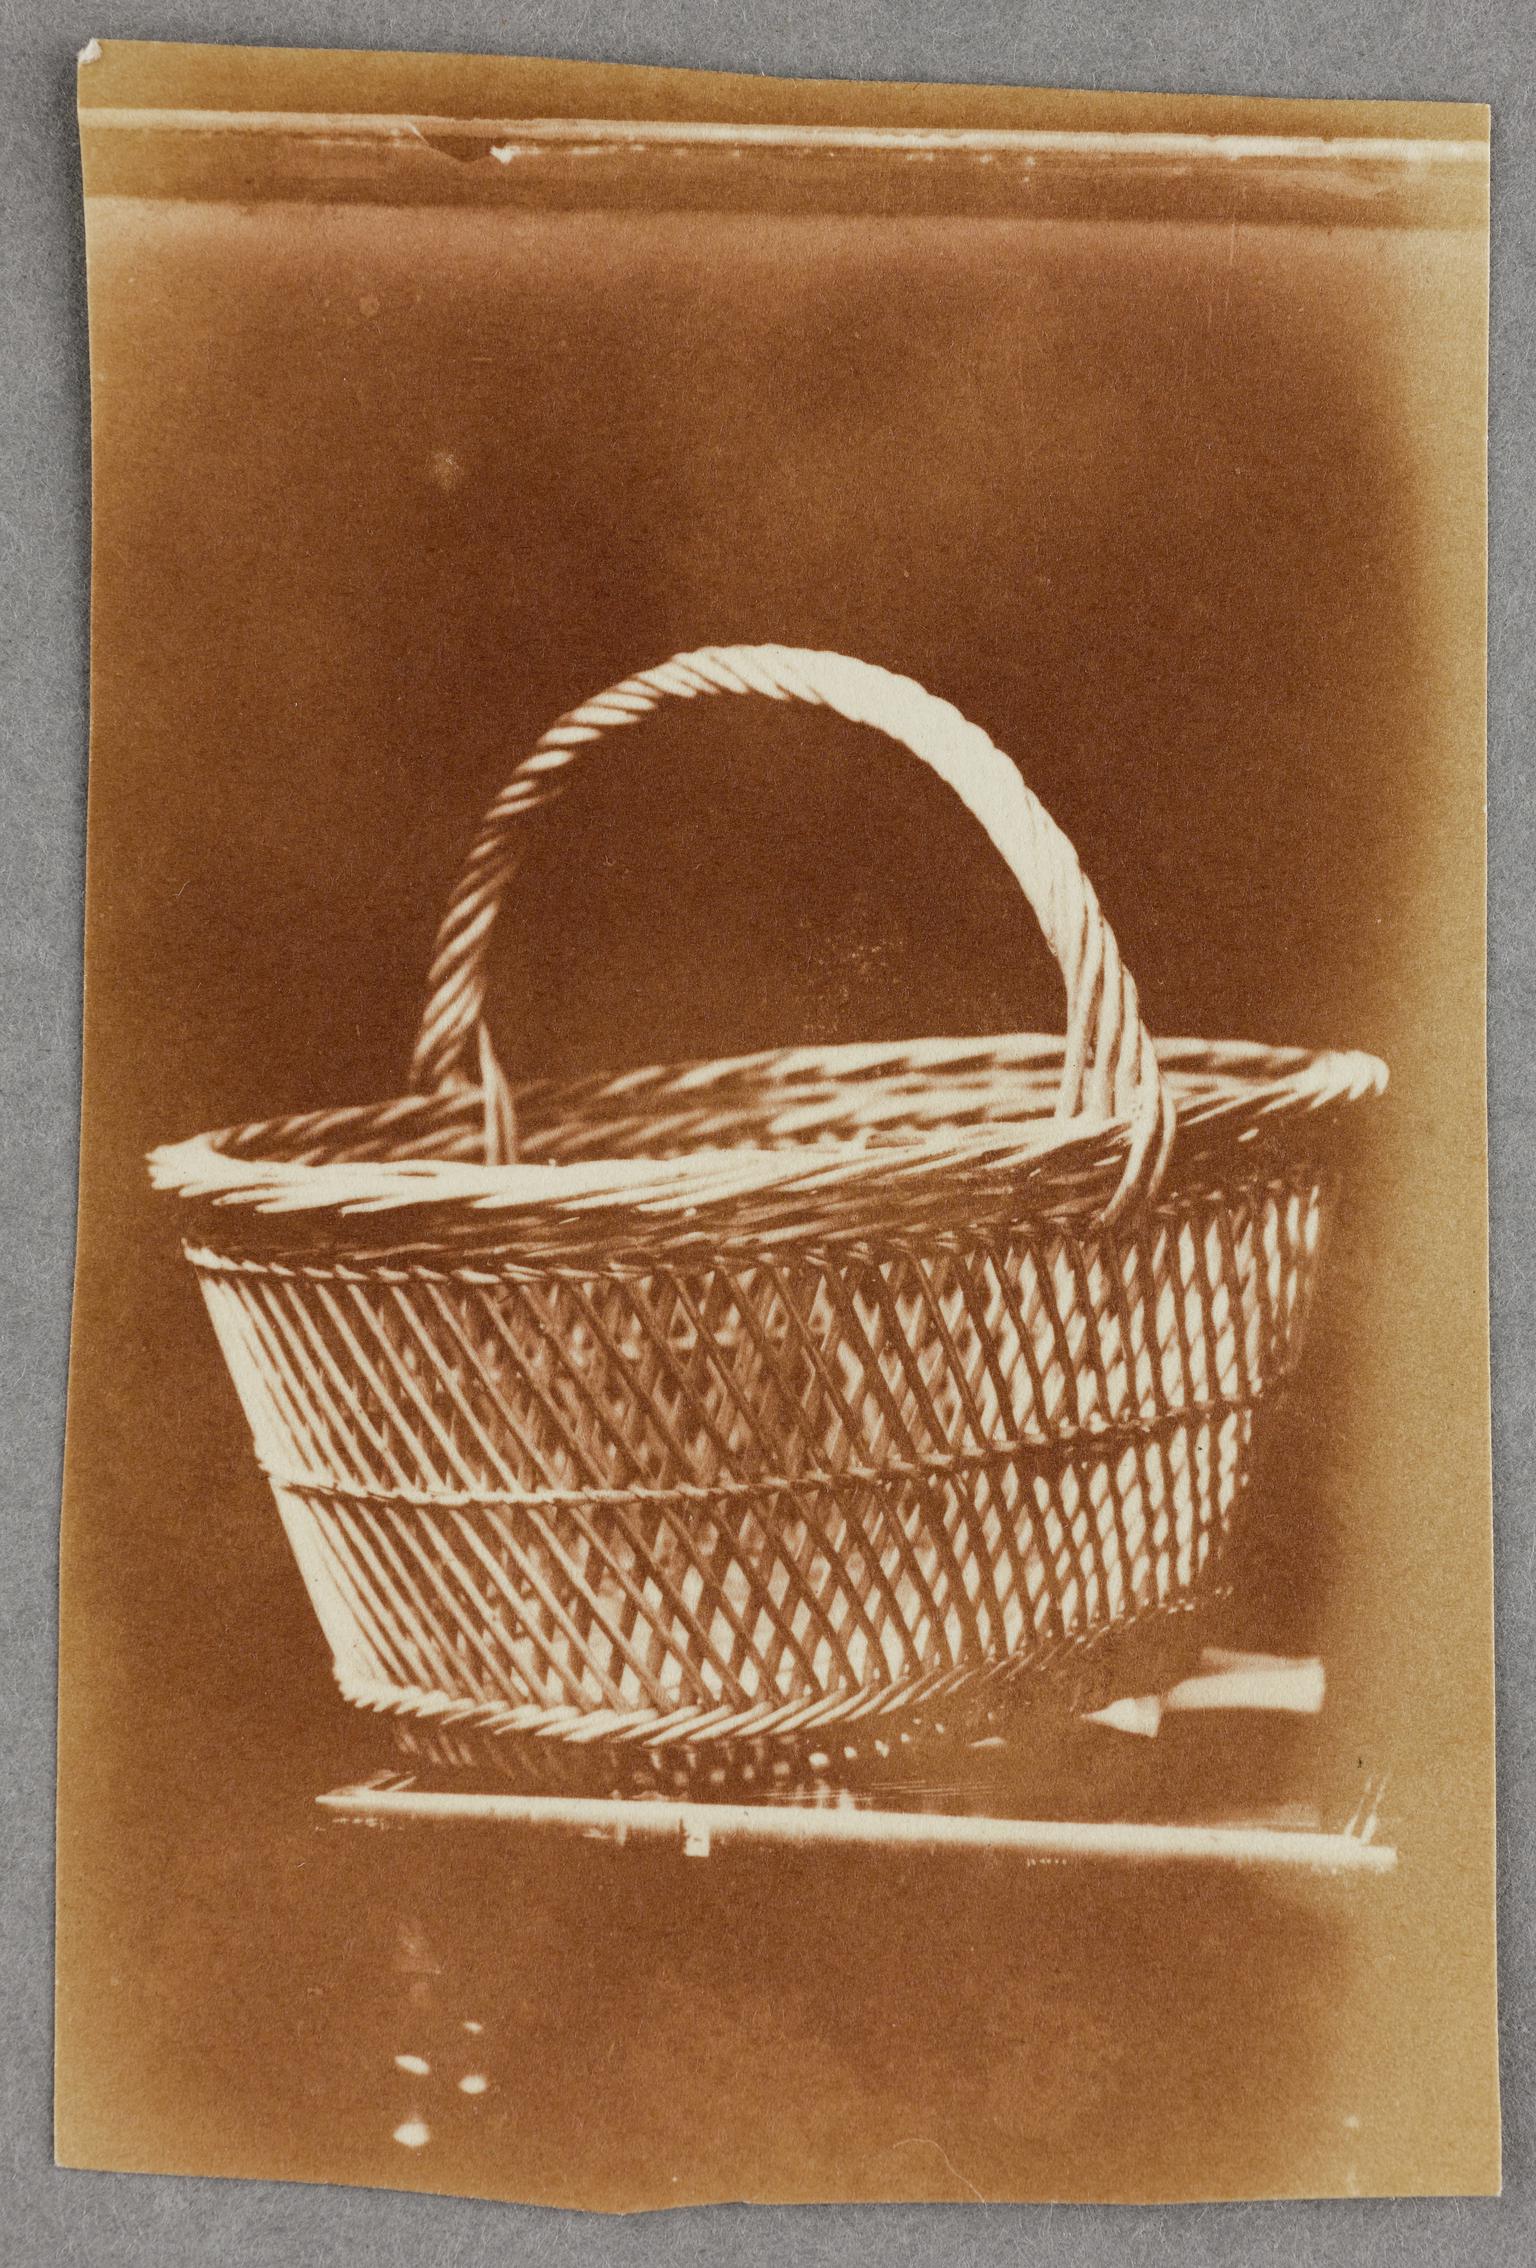 Basket on table, photograph